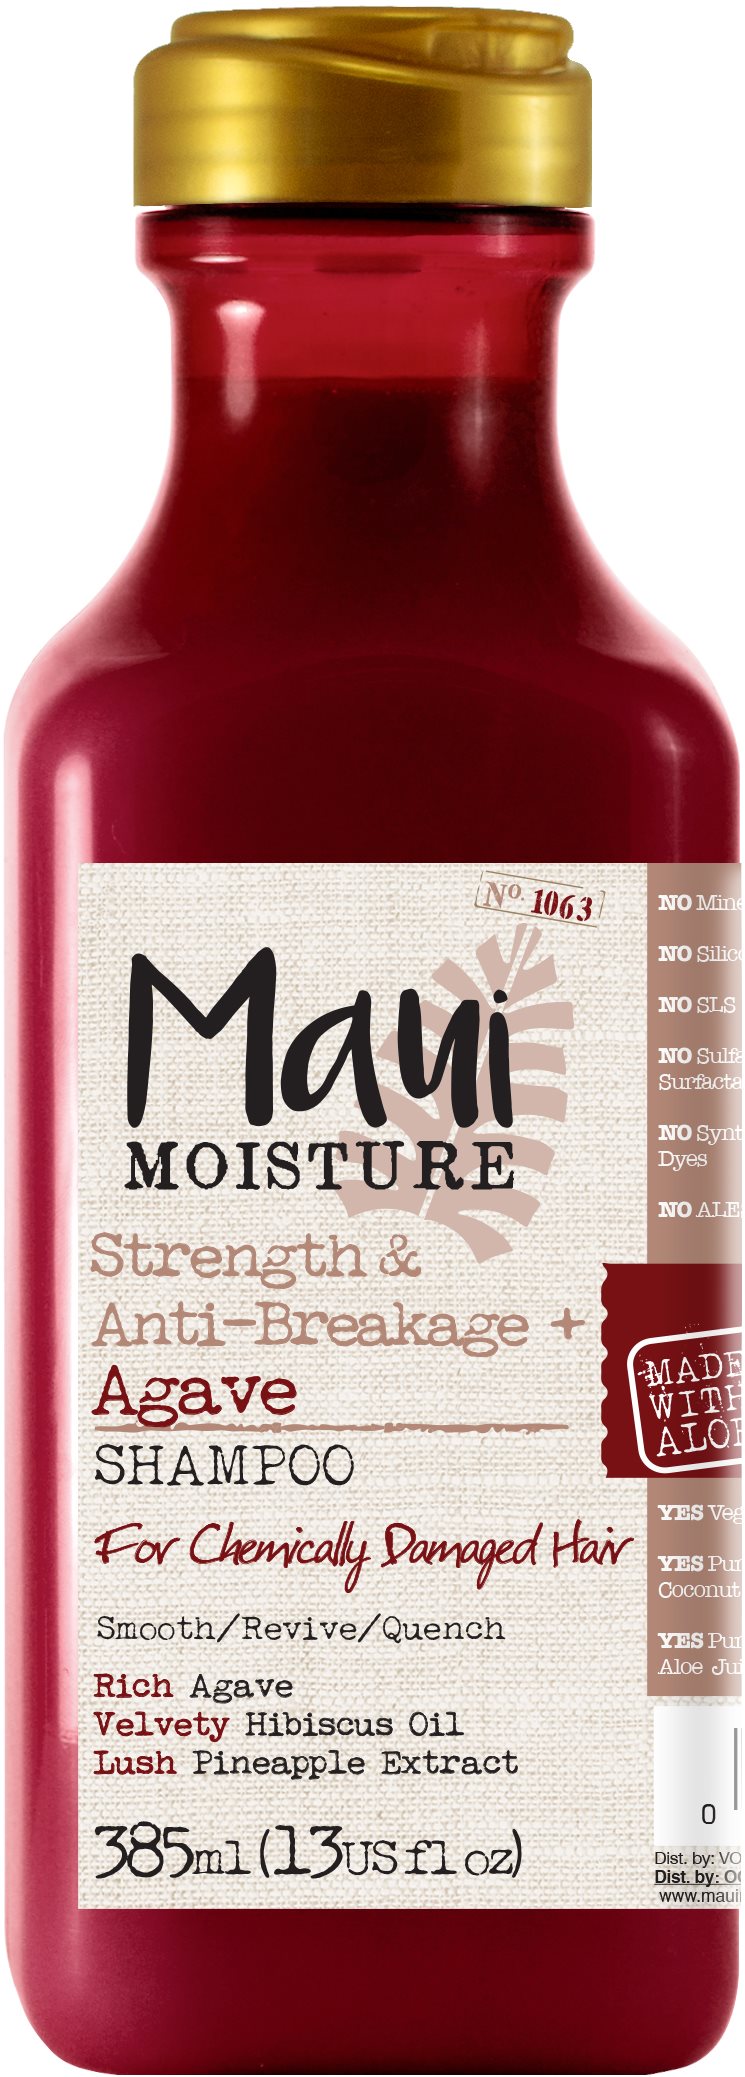 MAUI MOISTURE Agave Chemically Damaged Hair Shampoo 385 ml